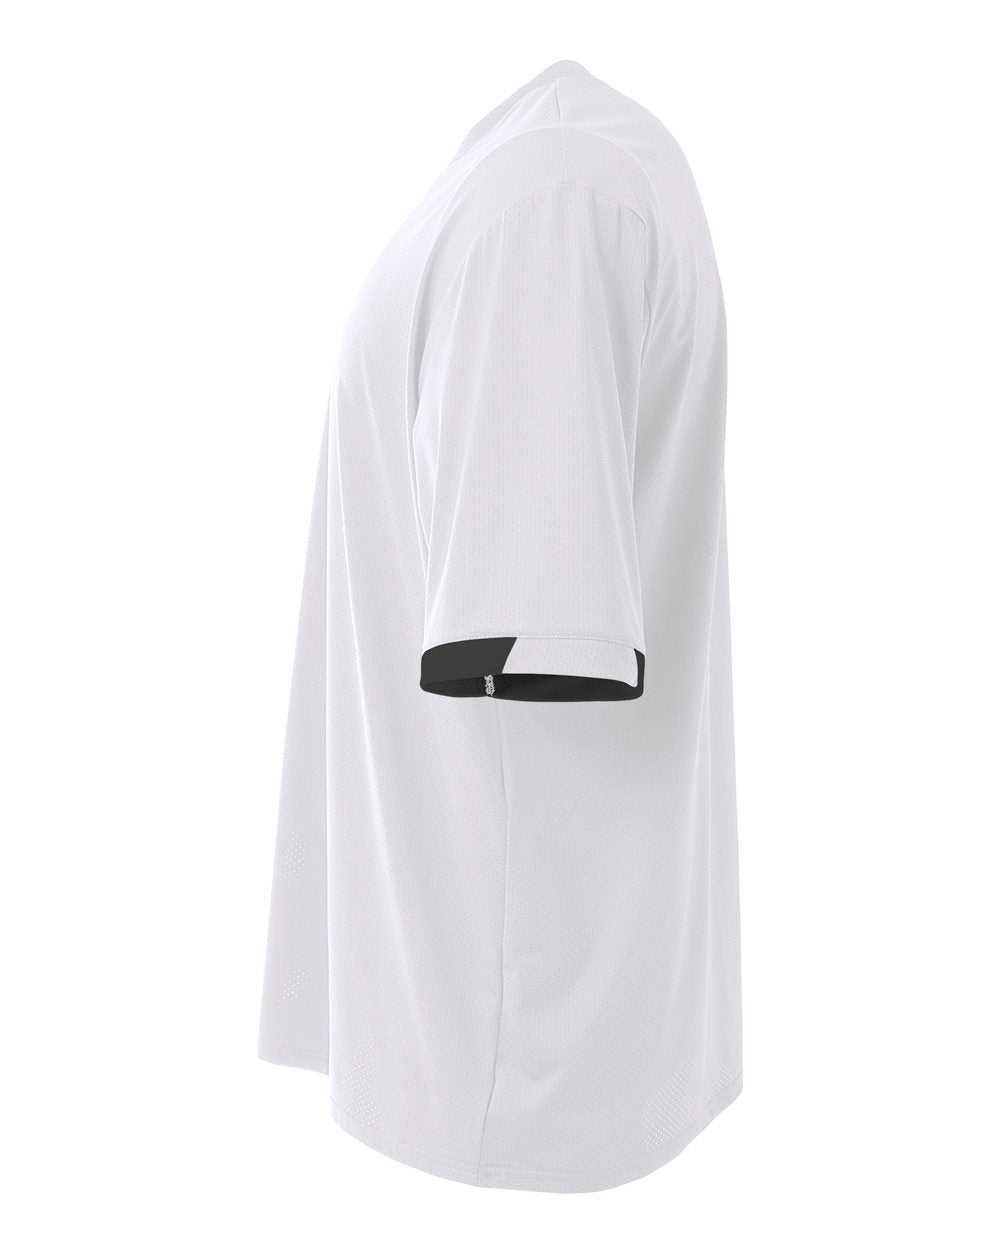 A4 N3011 The Stretch Pro - Mesh Baseball Jersey - White Black - HIT a Double